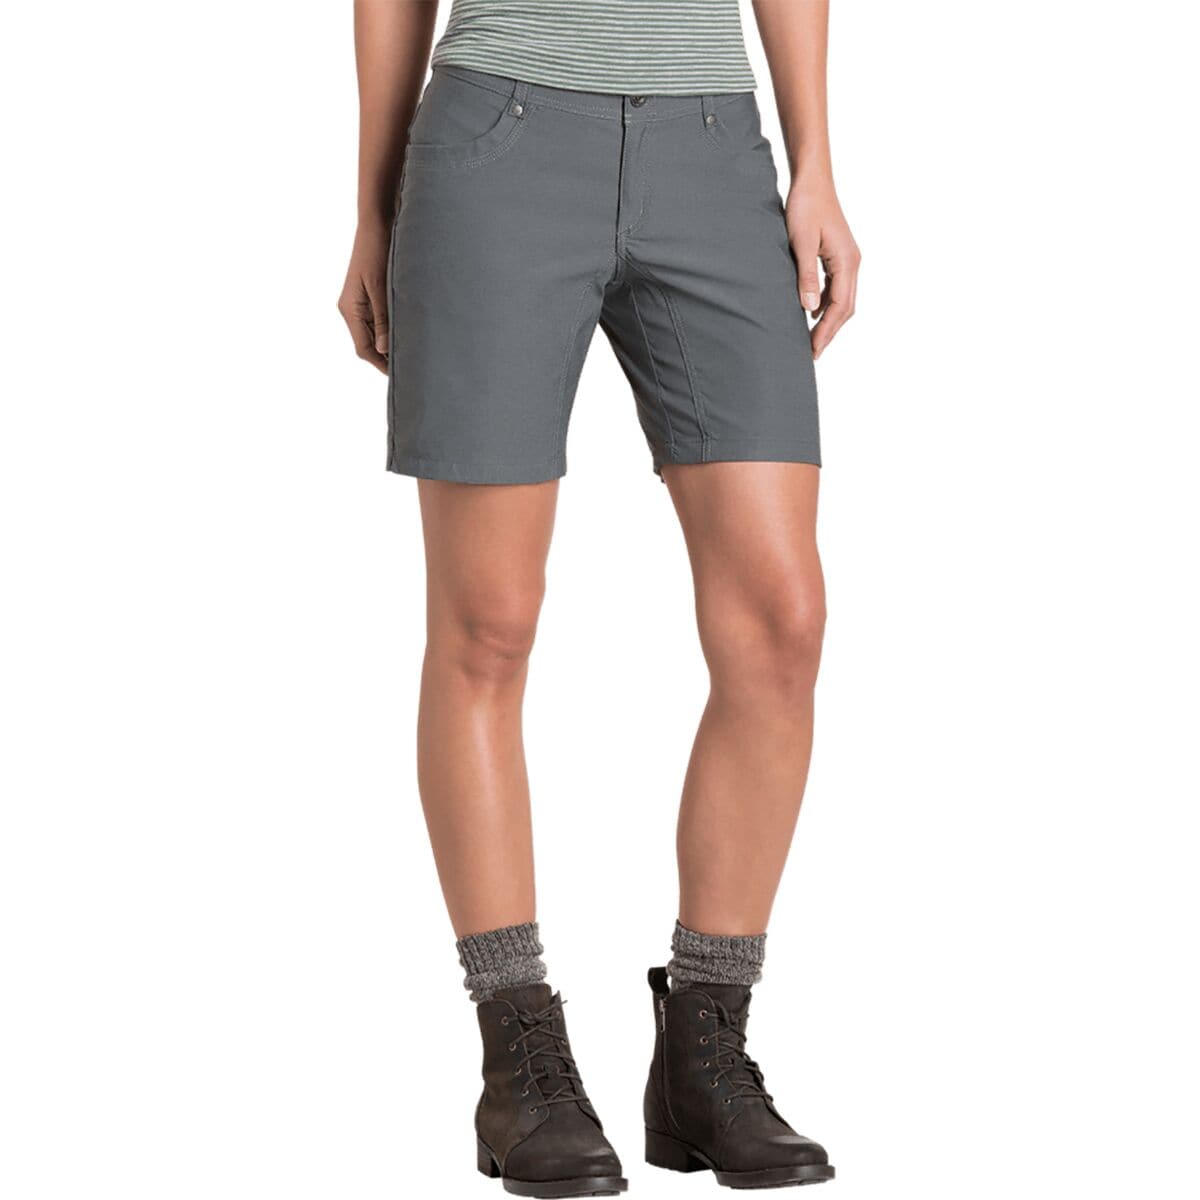 Kuhl women's Kuhl Kurve free range shorts Size 4 6.5” inseam Tan NWT